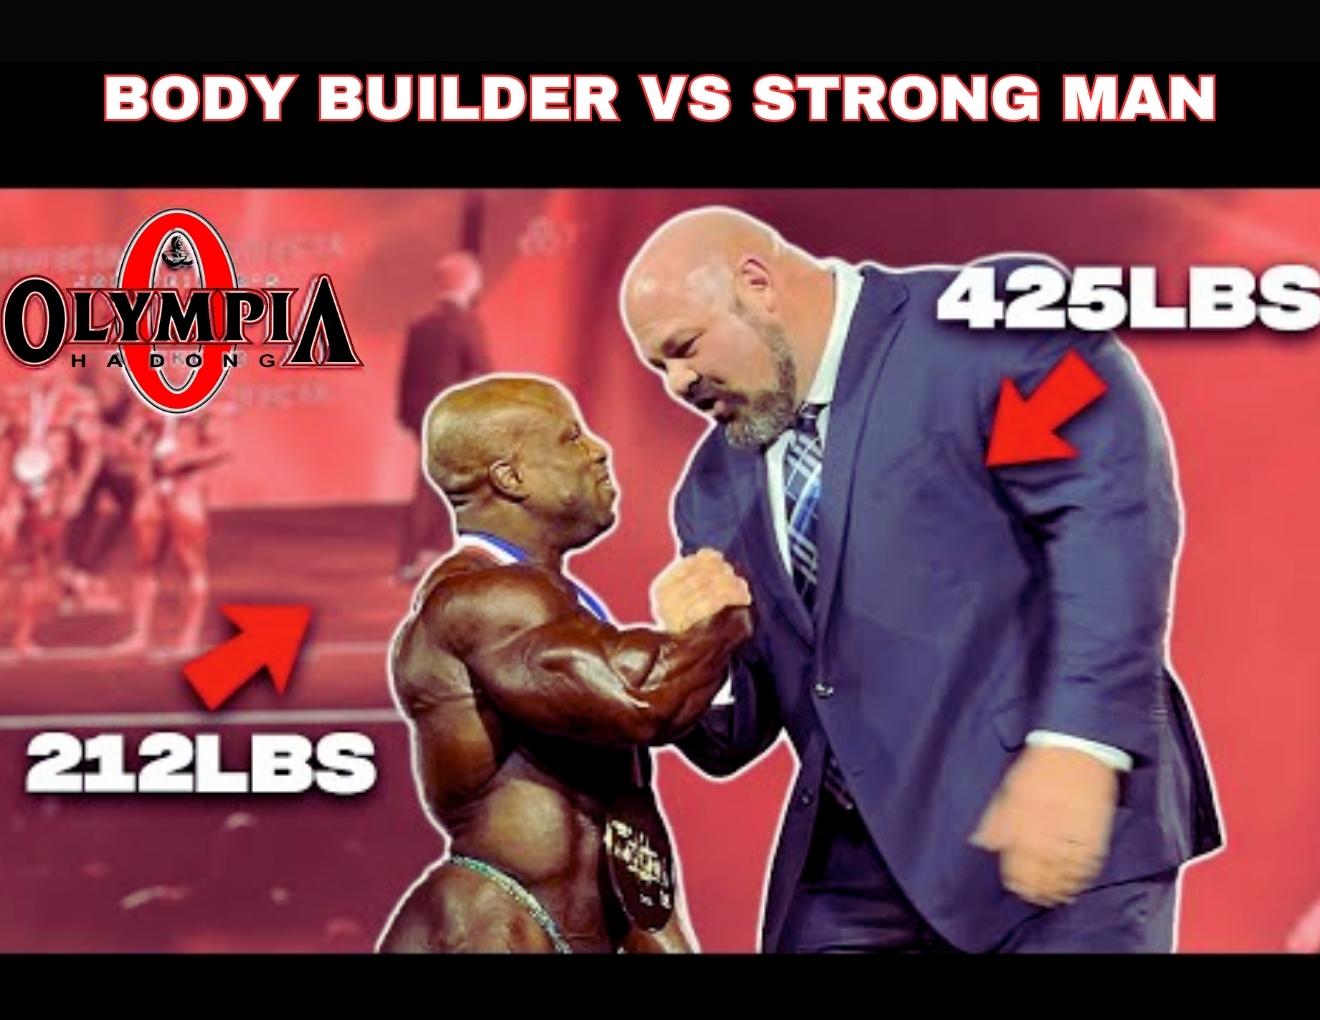 BODY BUILDER VS STRONG MAN